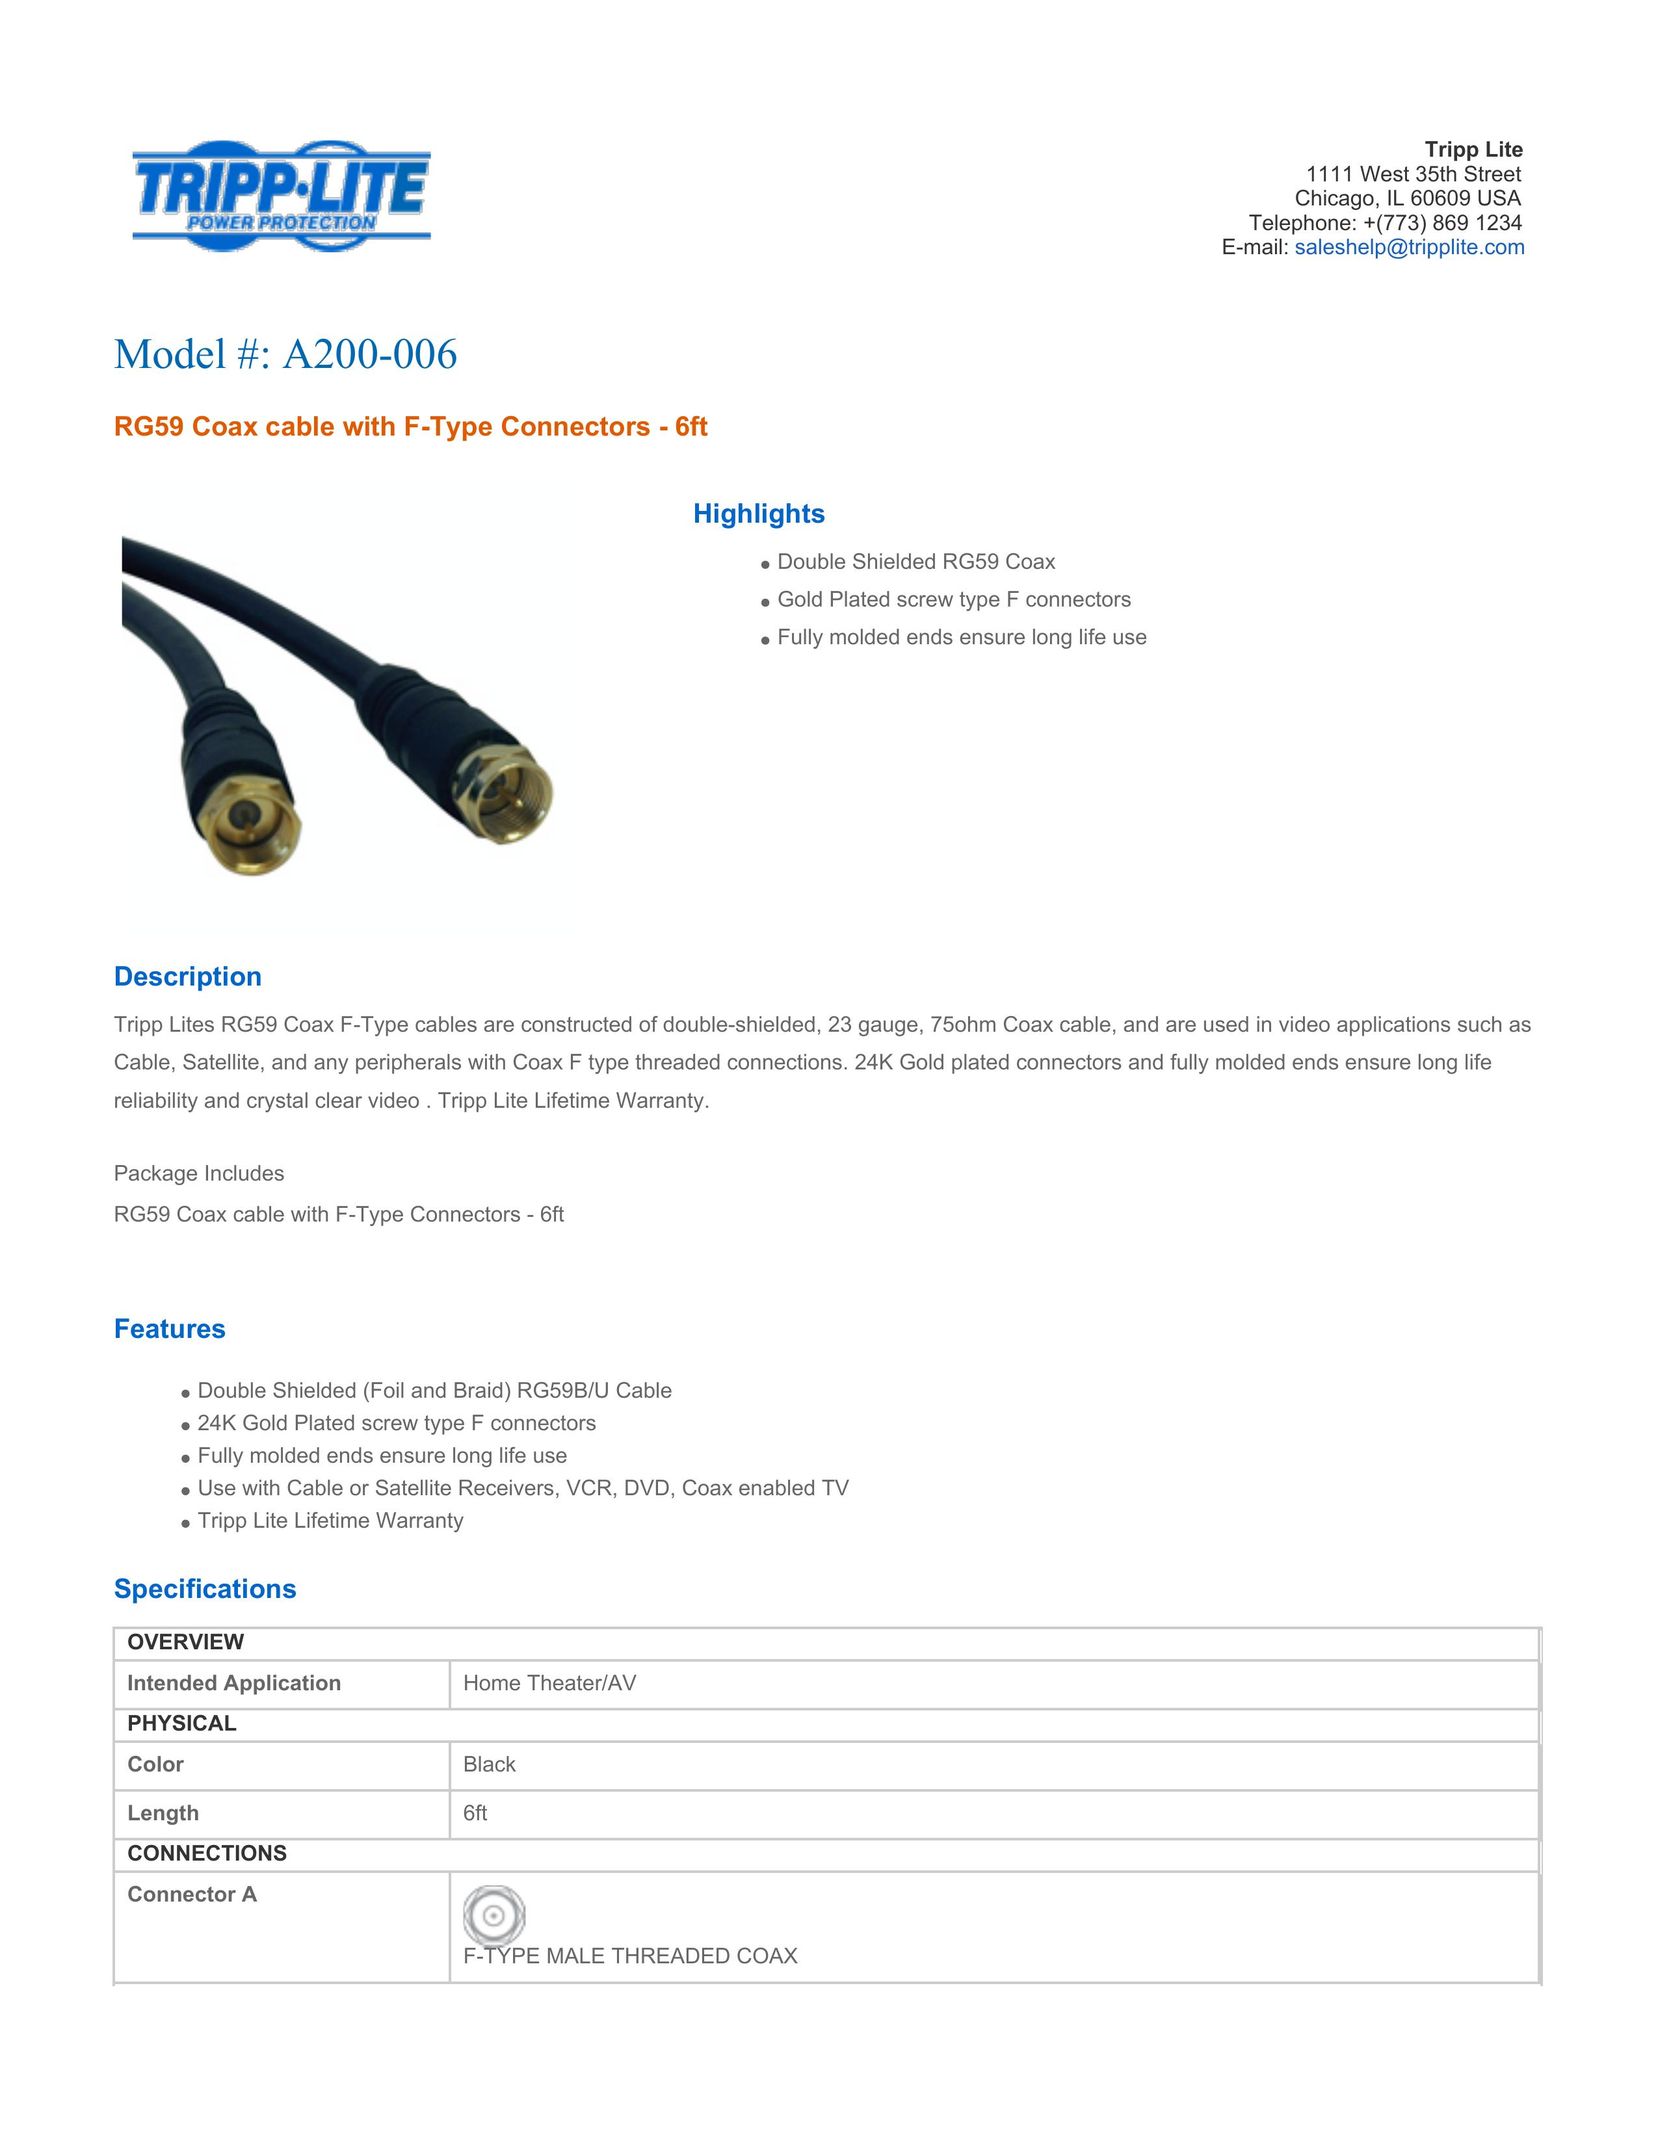 Tripp Lite A200-006 TV Cables User Manual